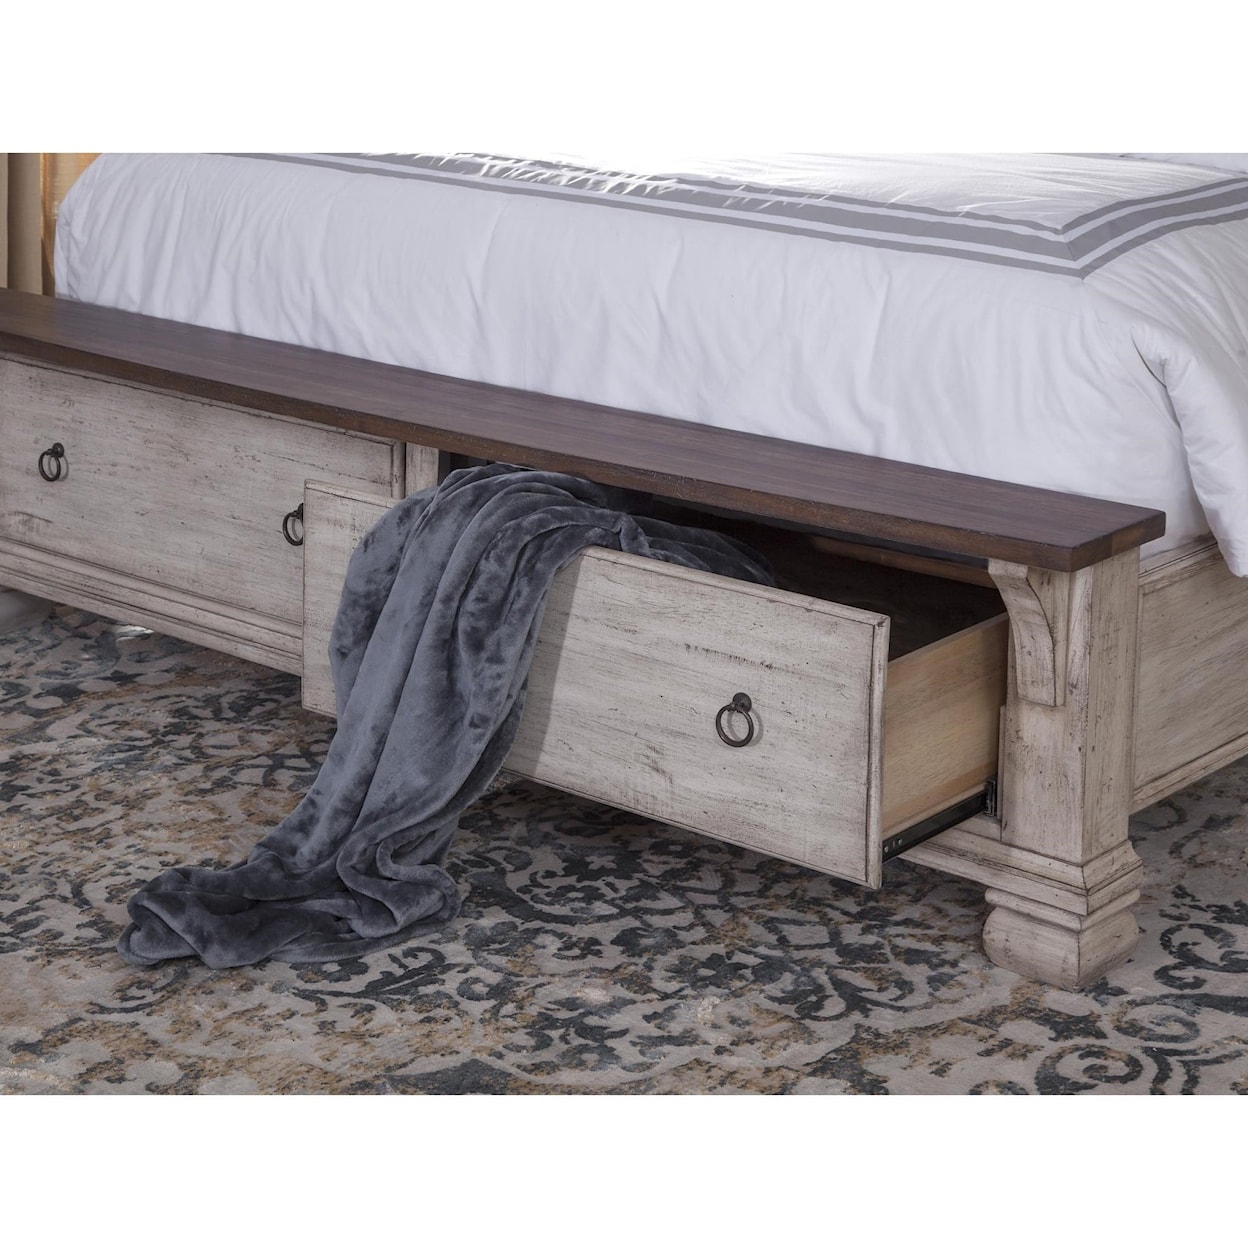 Virginia Furniture Market Solid Wood Normandy Queen Storage Bed